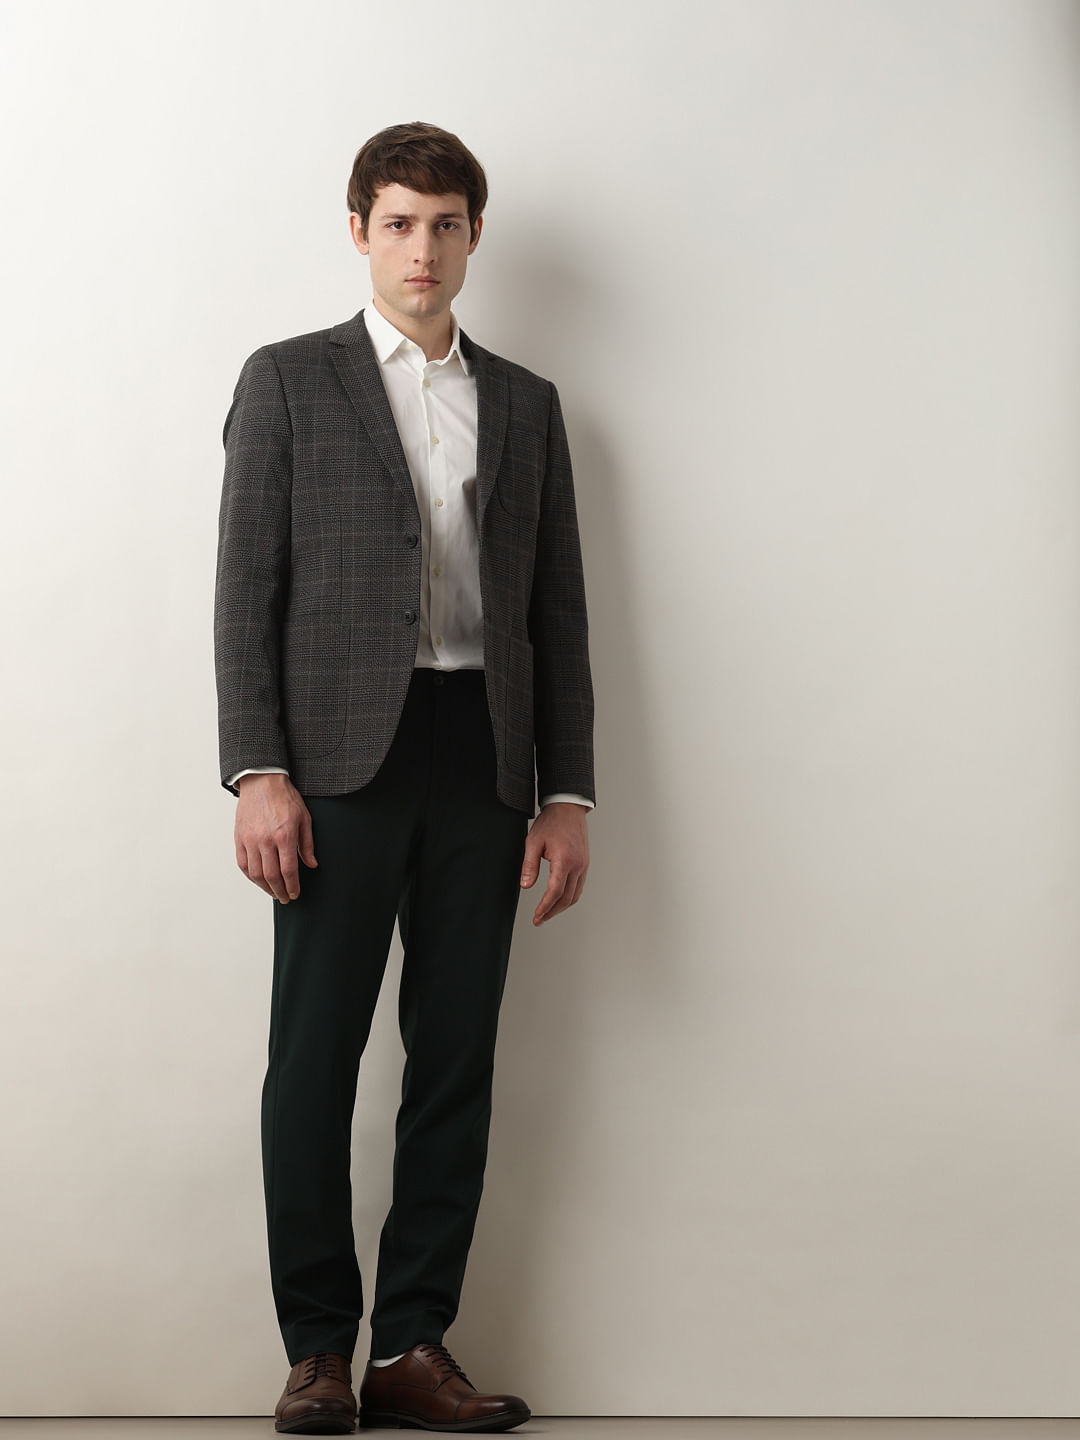 How to Wear Men's Separates Combinations | Black and grey suit, Black blazer  men, Black trousers men